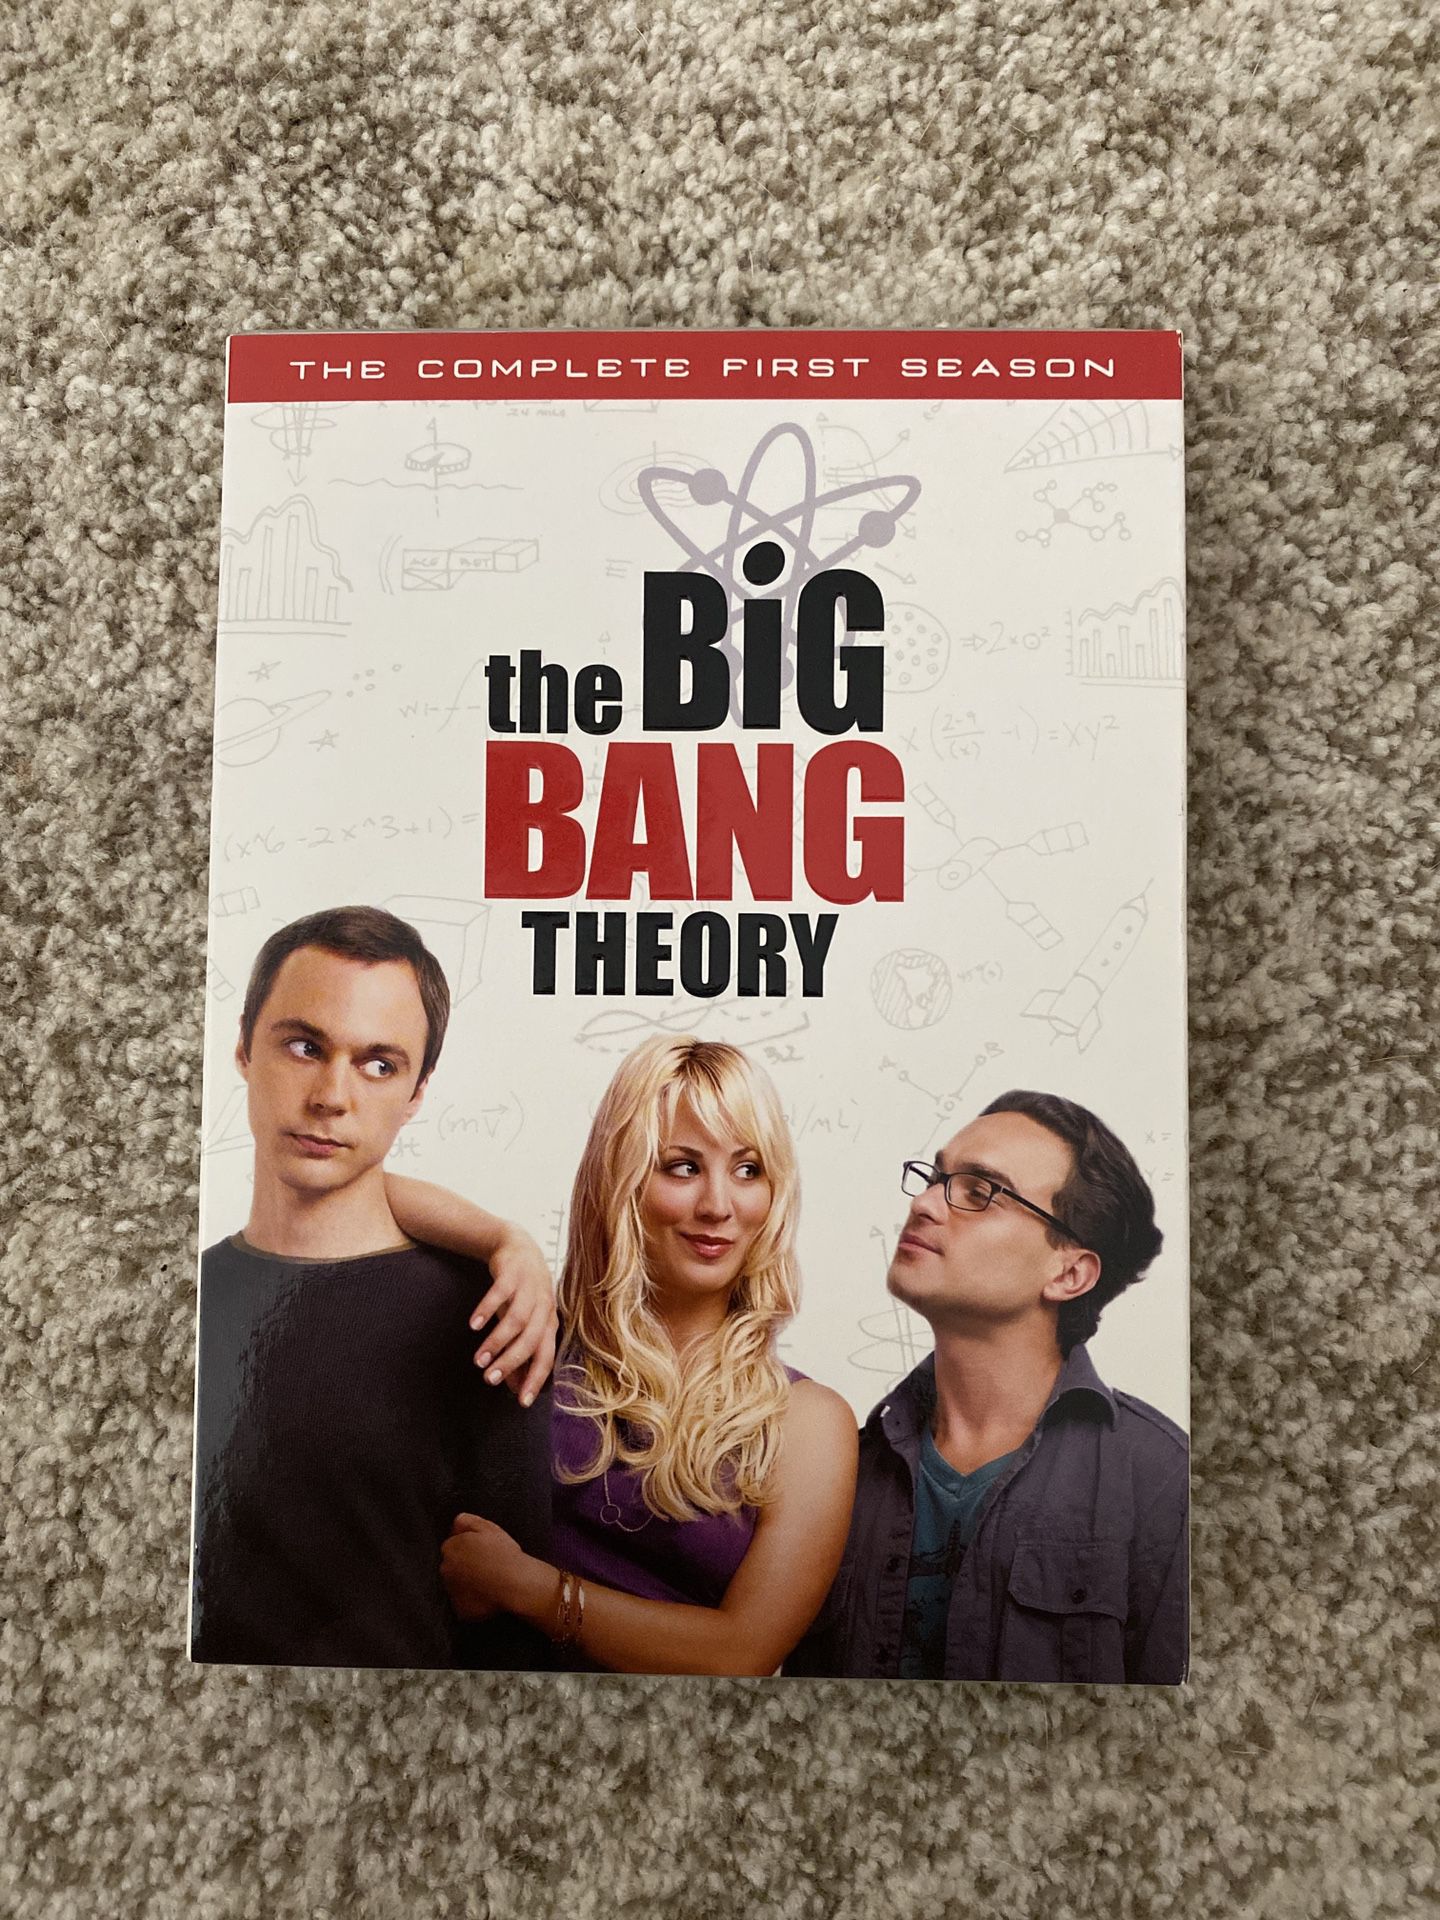 The Big Bang Theory Season 1 DVD